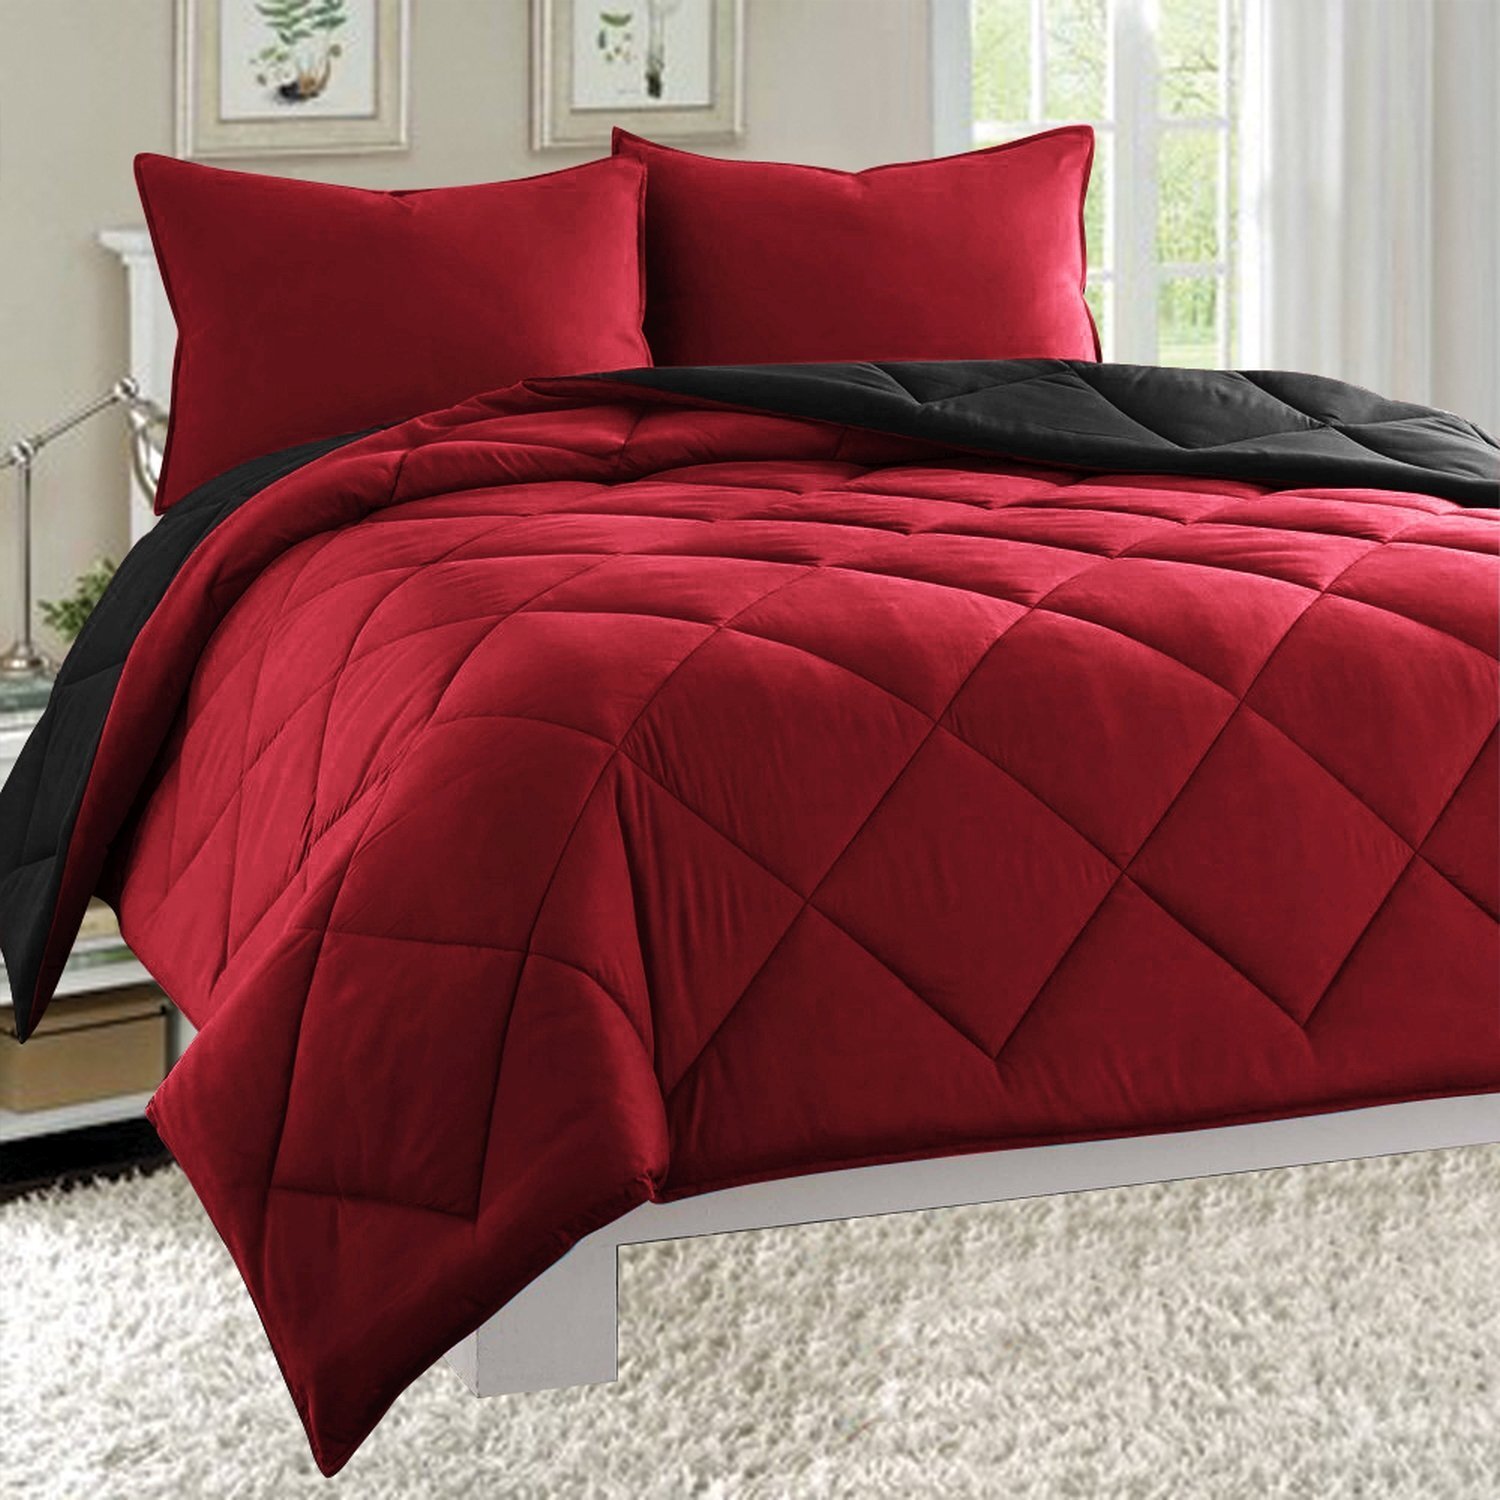 Down Alternative Comforter All Season Warmth Luxurious Plush Loft Microfiber Fill Duvet Insert Bedding Full Pale Pink